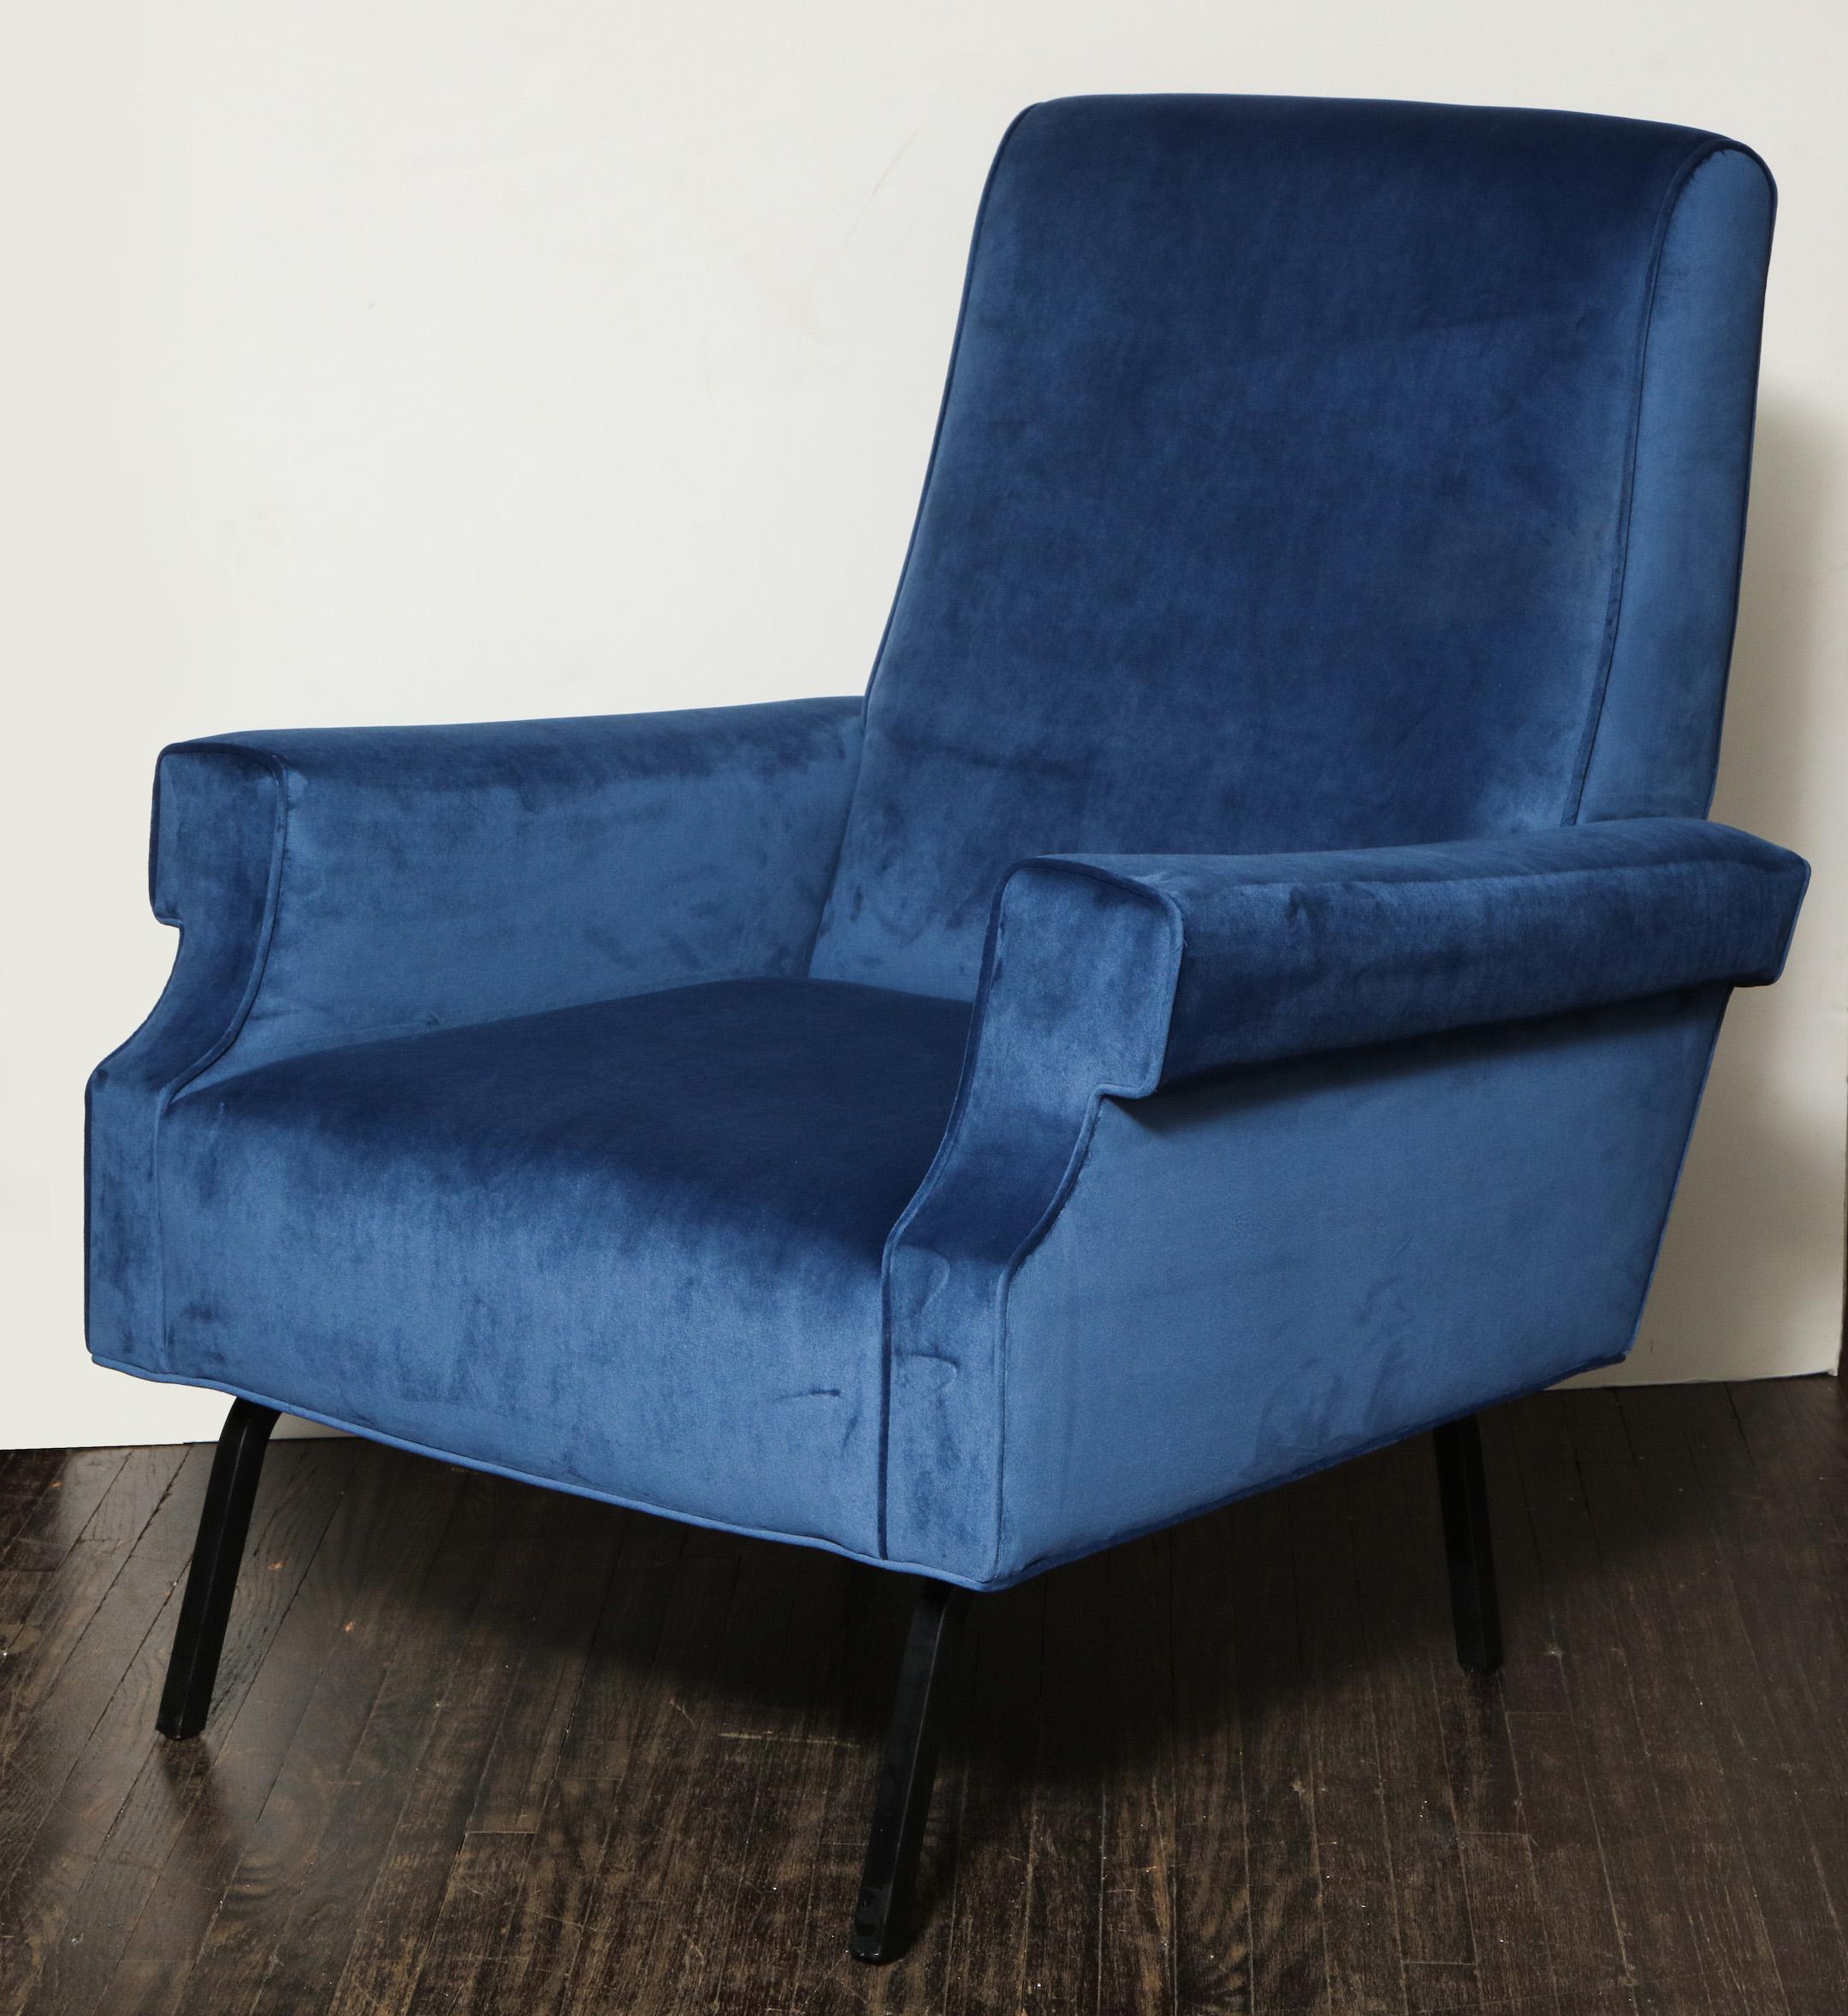 20th Century Pair of Mid-Century Modern Blue Velvet Chairs with Black Iron Legs